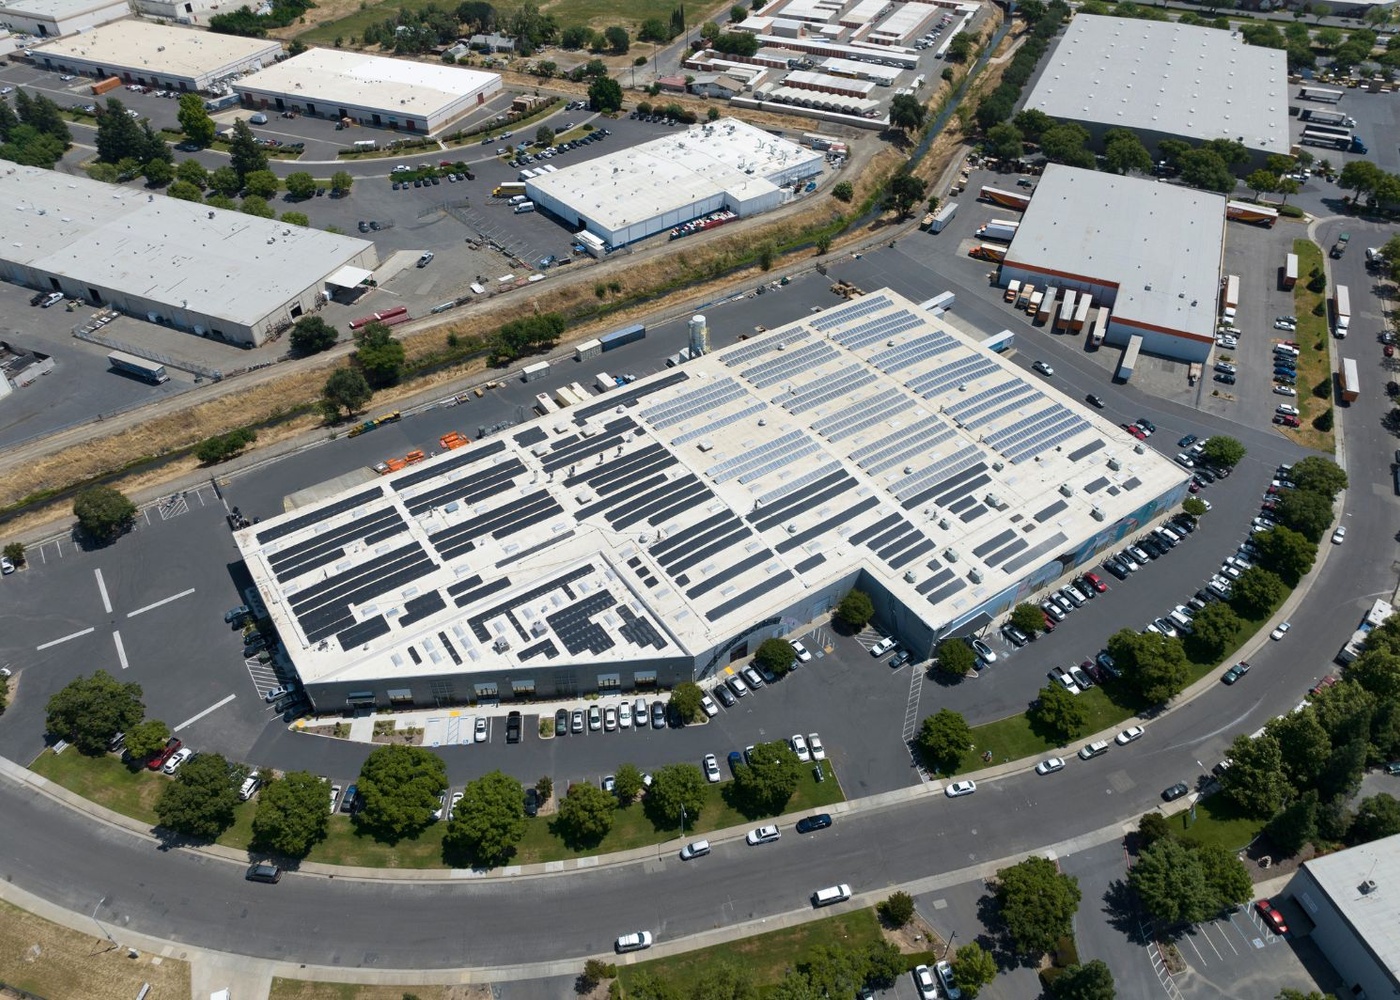 View of Balanced Body's Headquarters solar panels